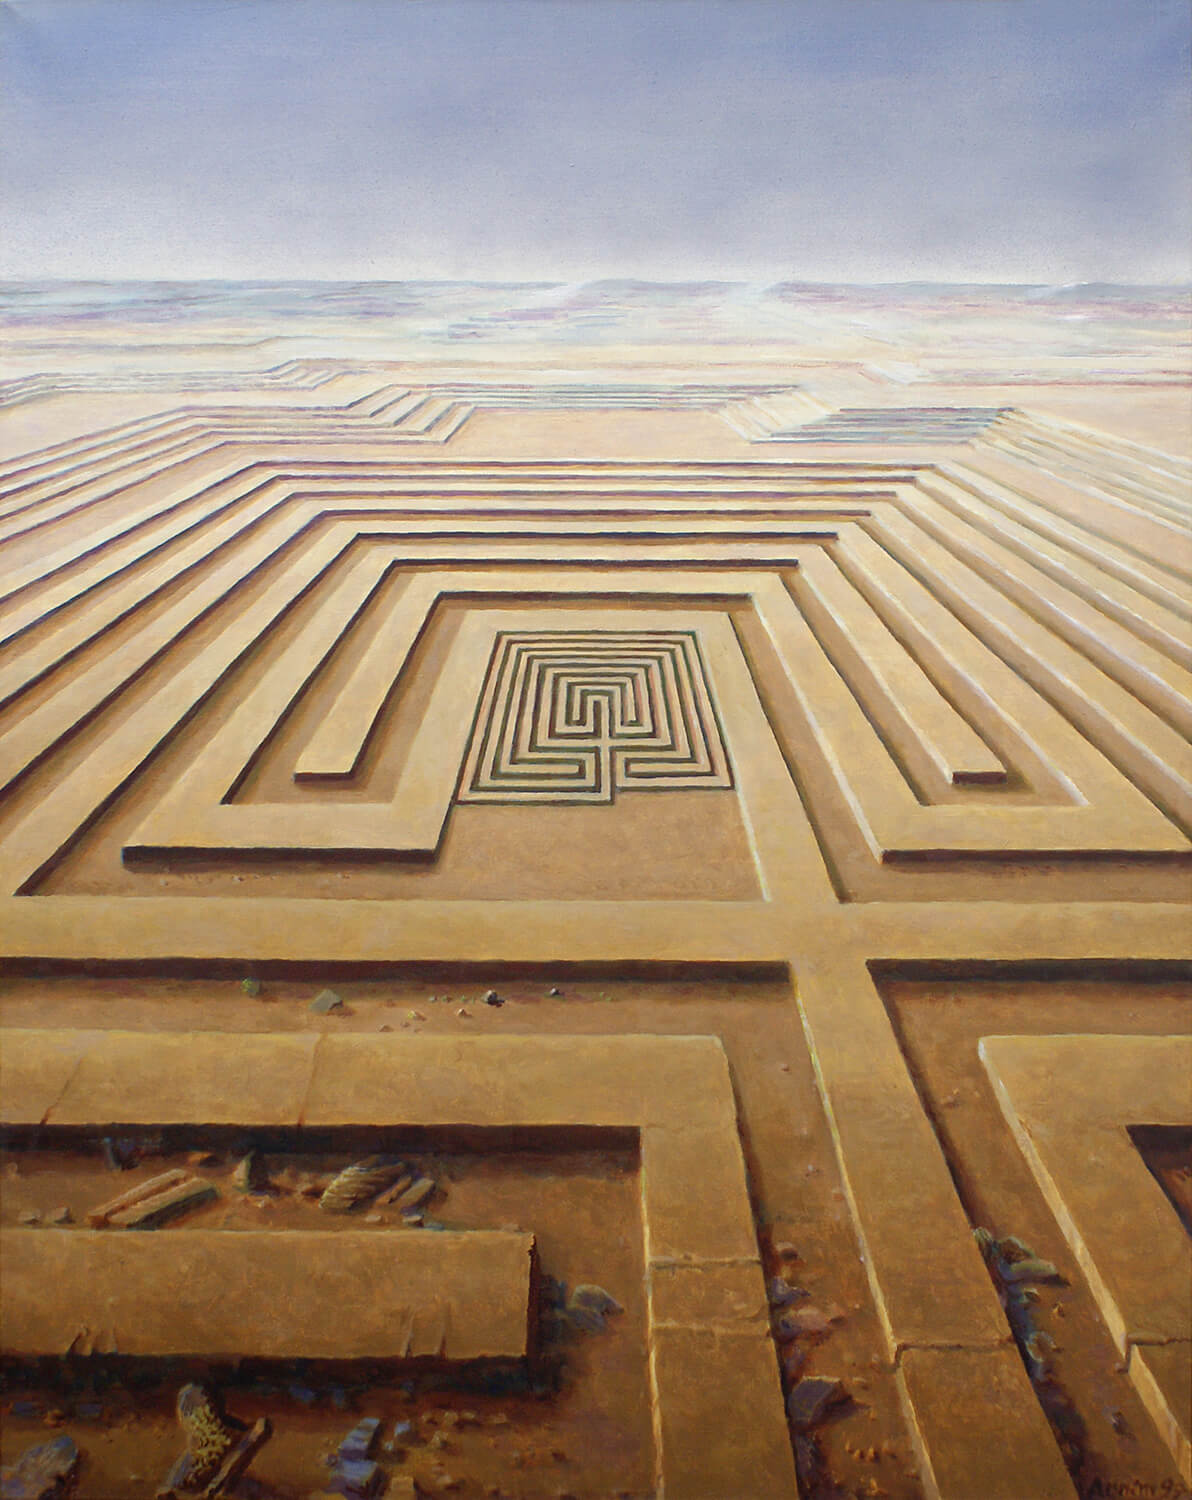 Bettina von Arnim, Labyrinth, 1997, Öl auf Leinwand, 92 x 73 cm